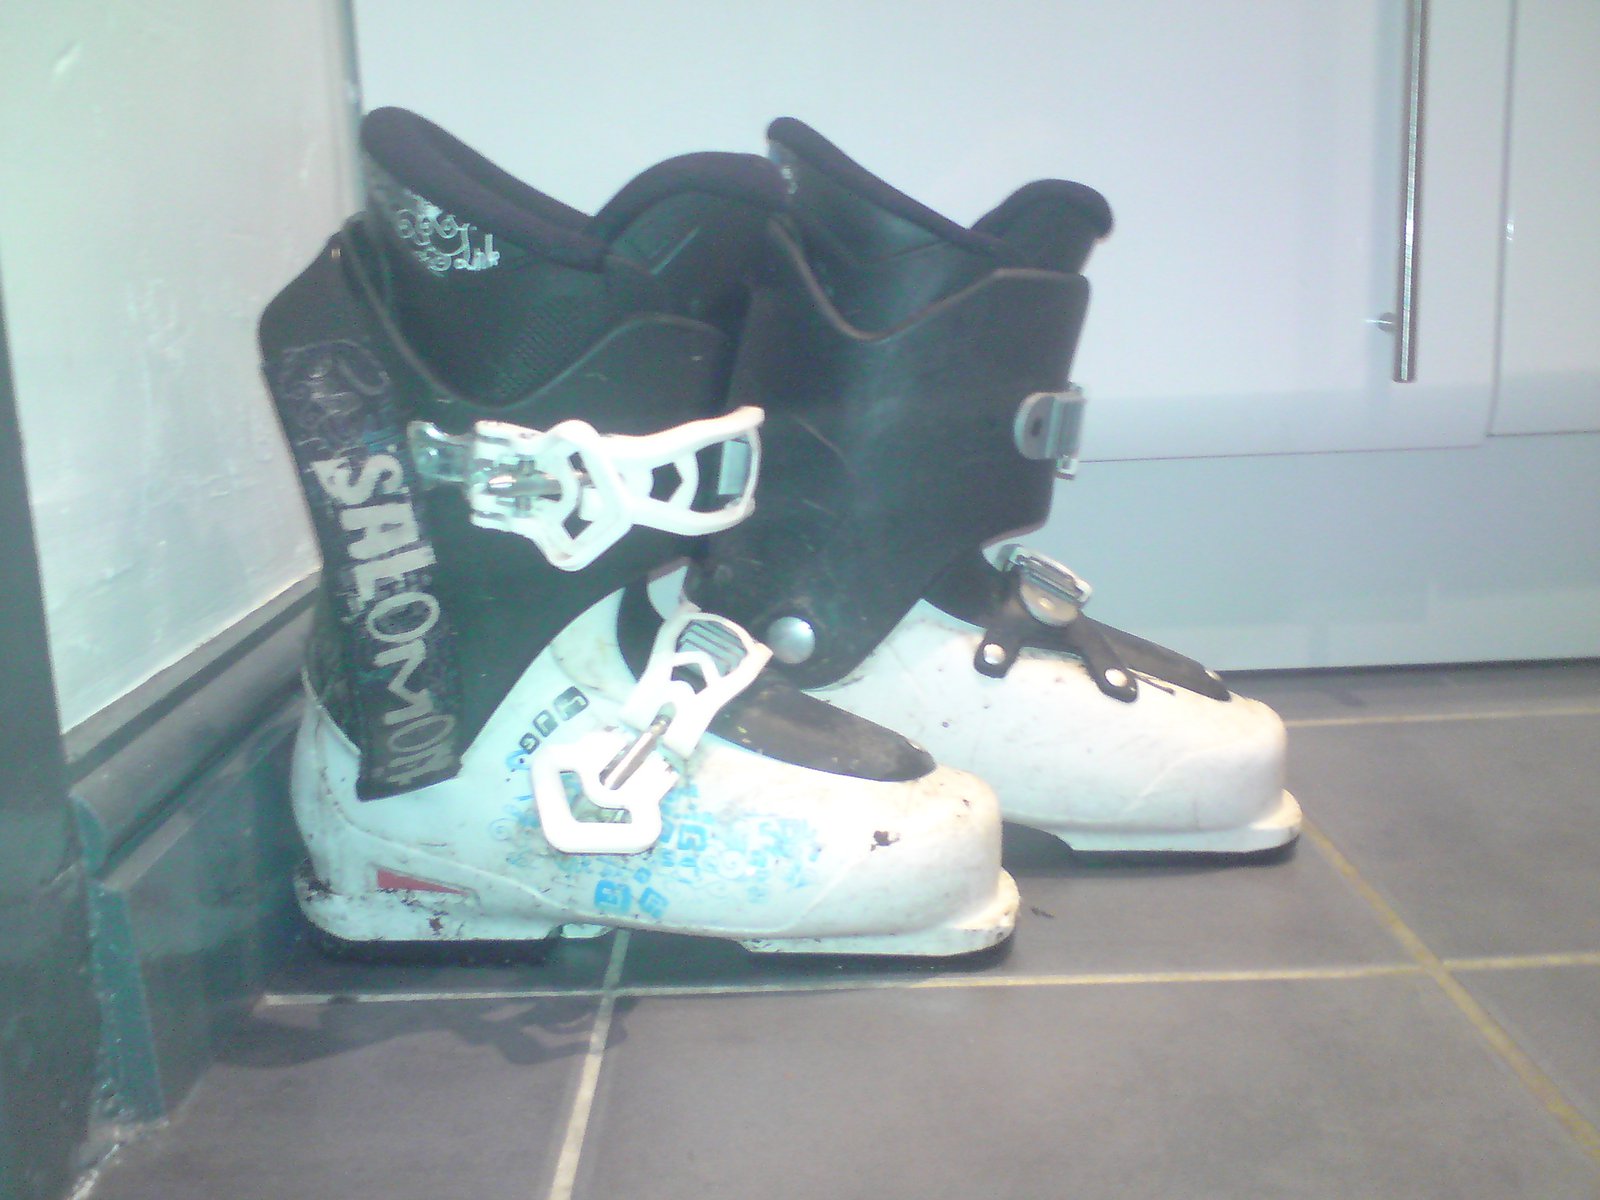 My salomon spk boots